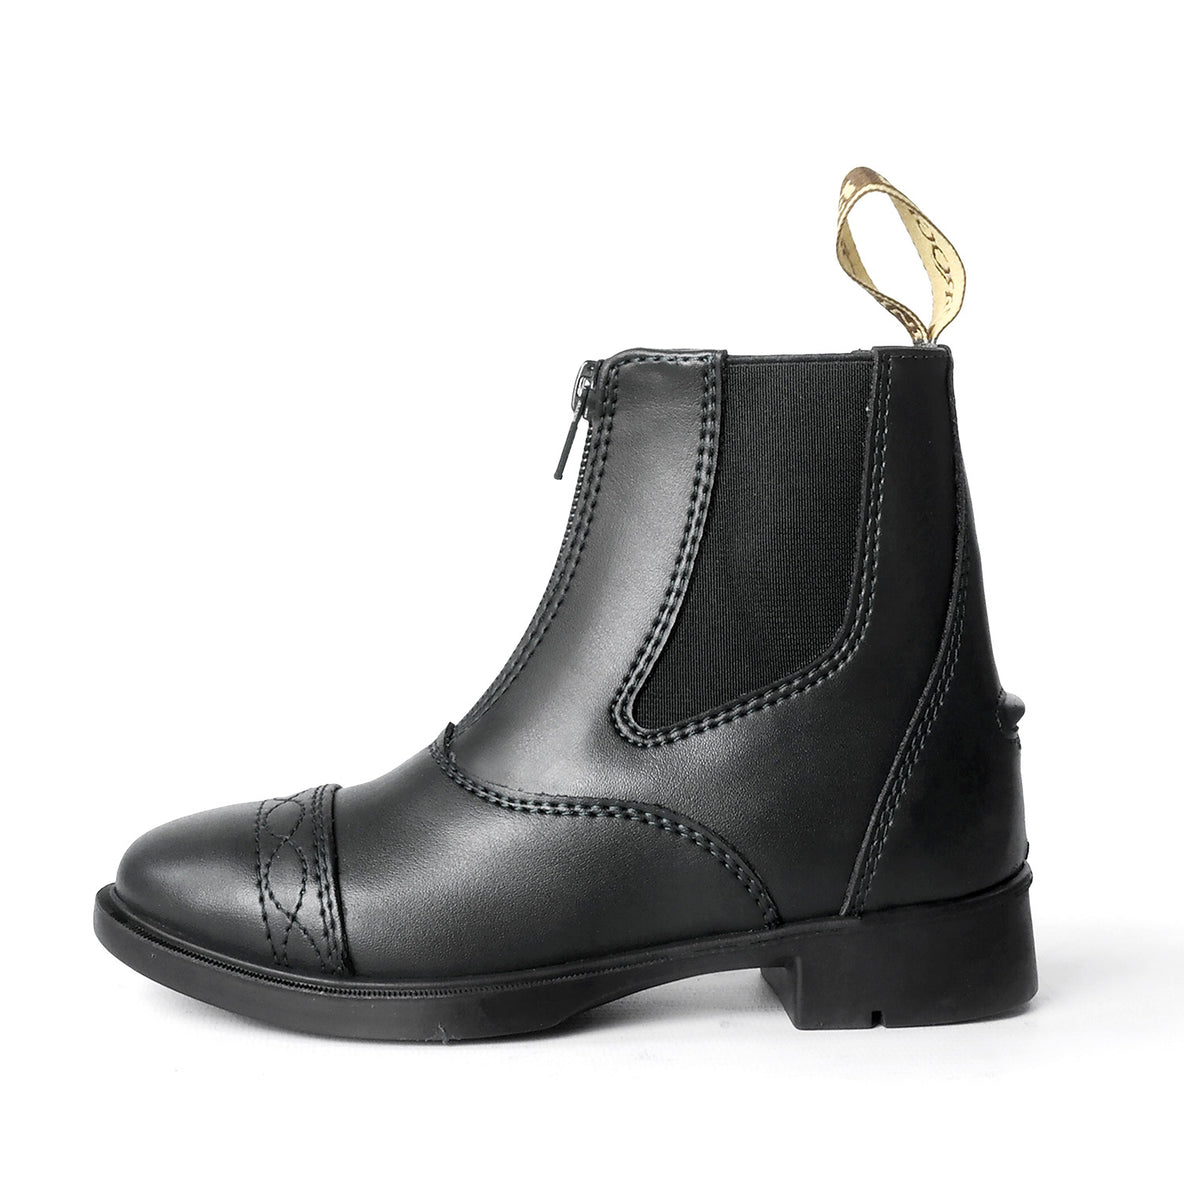 Brogini Tivoli Piccino Yr Paddock Boots Childs In Black